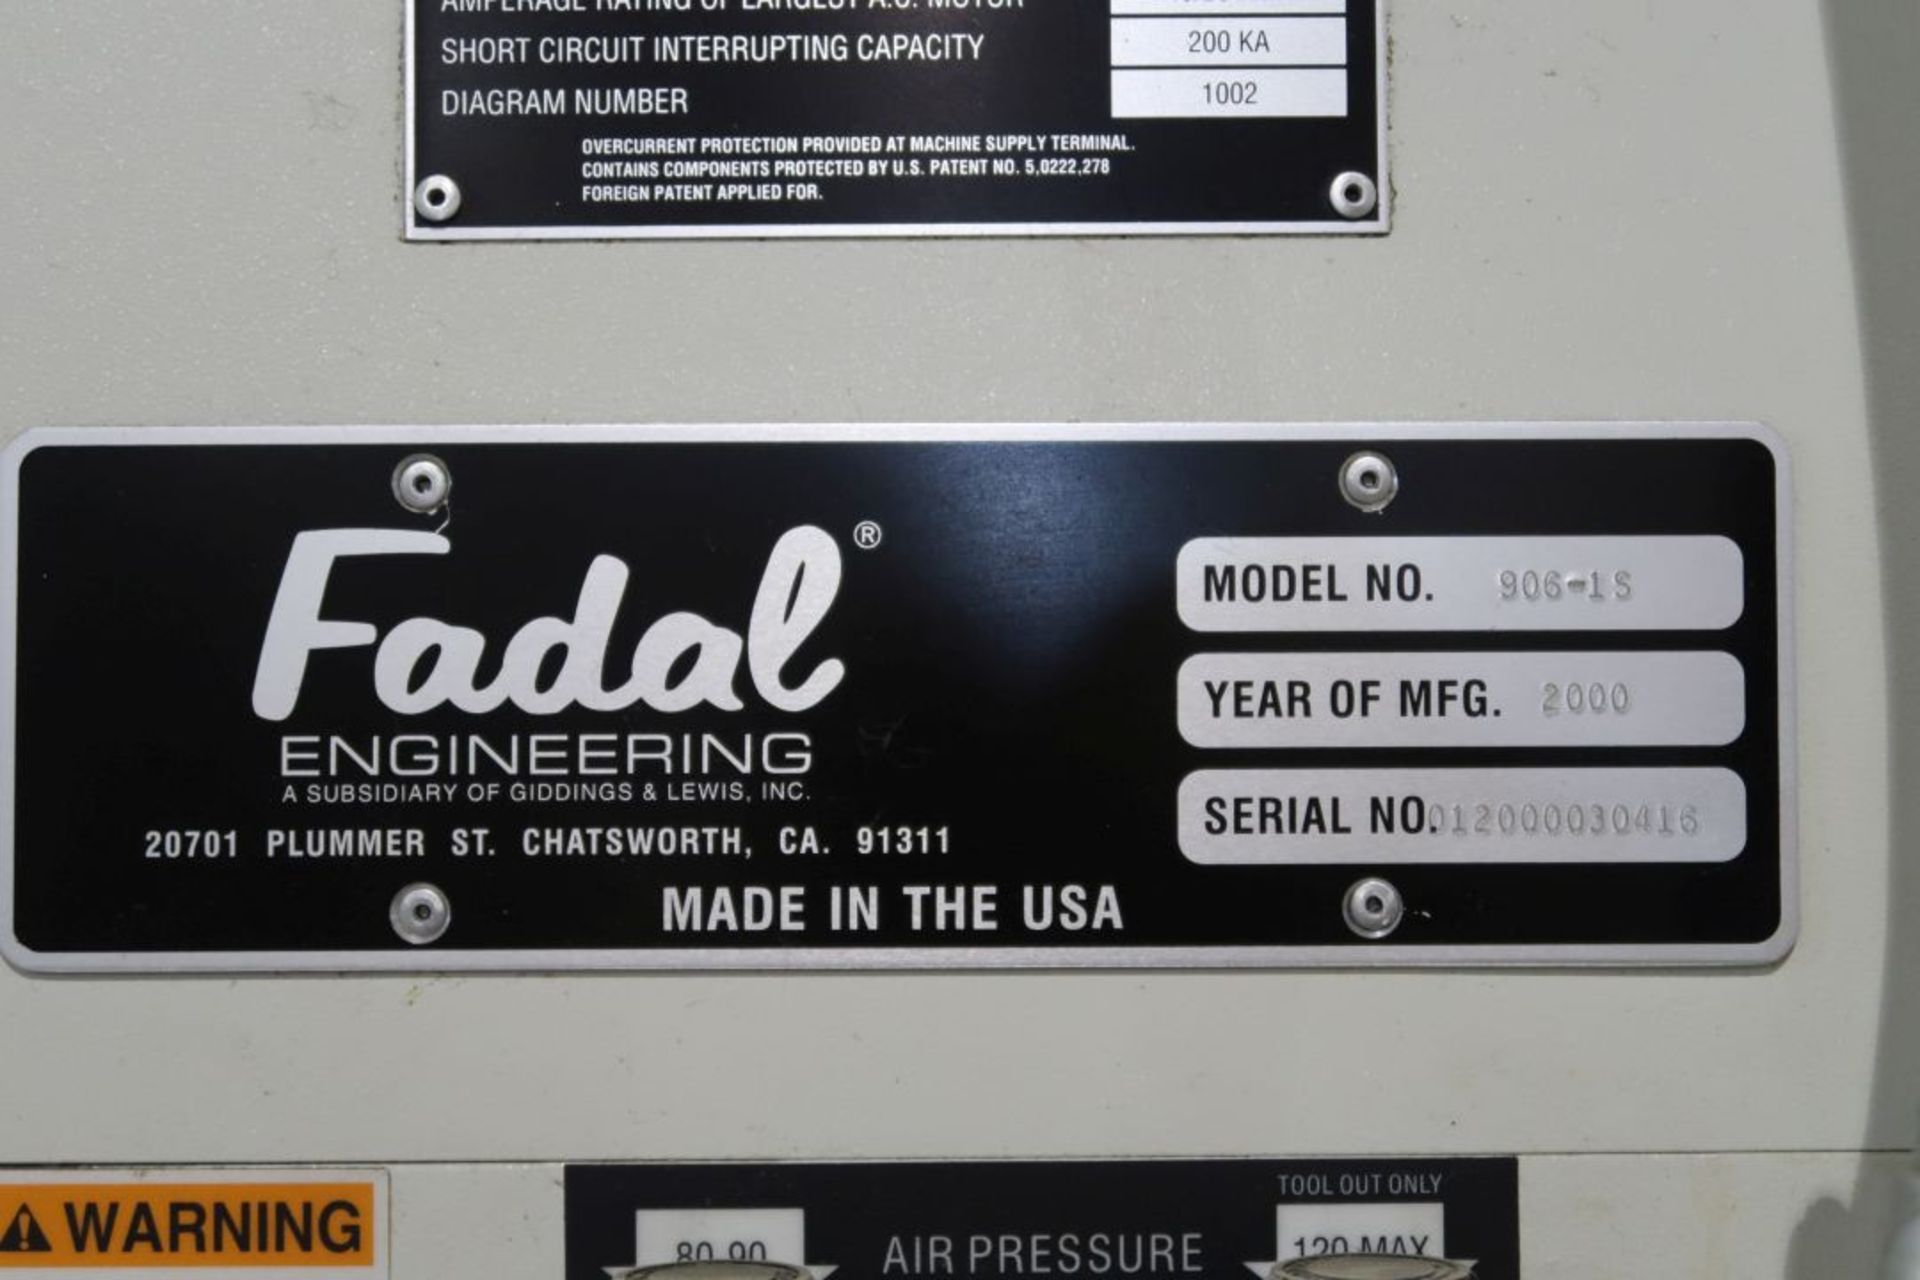 FADAL VMC-4020HT VERTICAL MACHINING CENTER (2000) MOD 906-1S, SN: 01200030416, FADAL MULTI PROCESSOR - Image 8 of 8